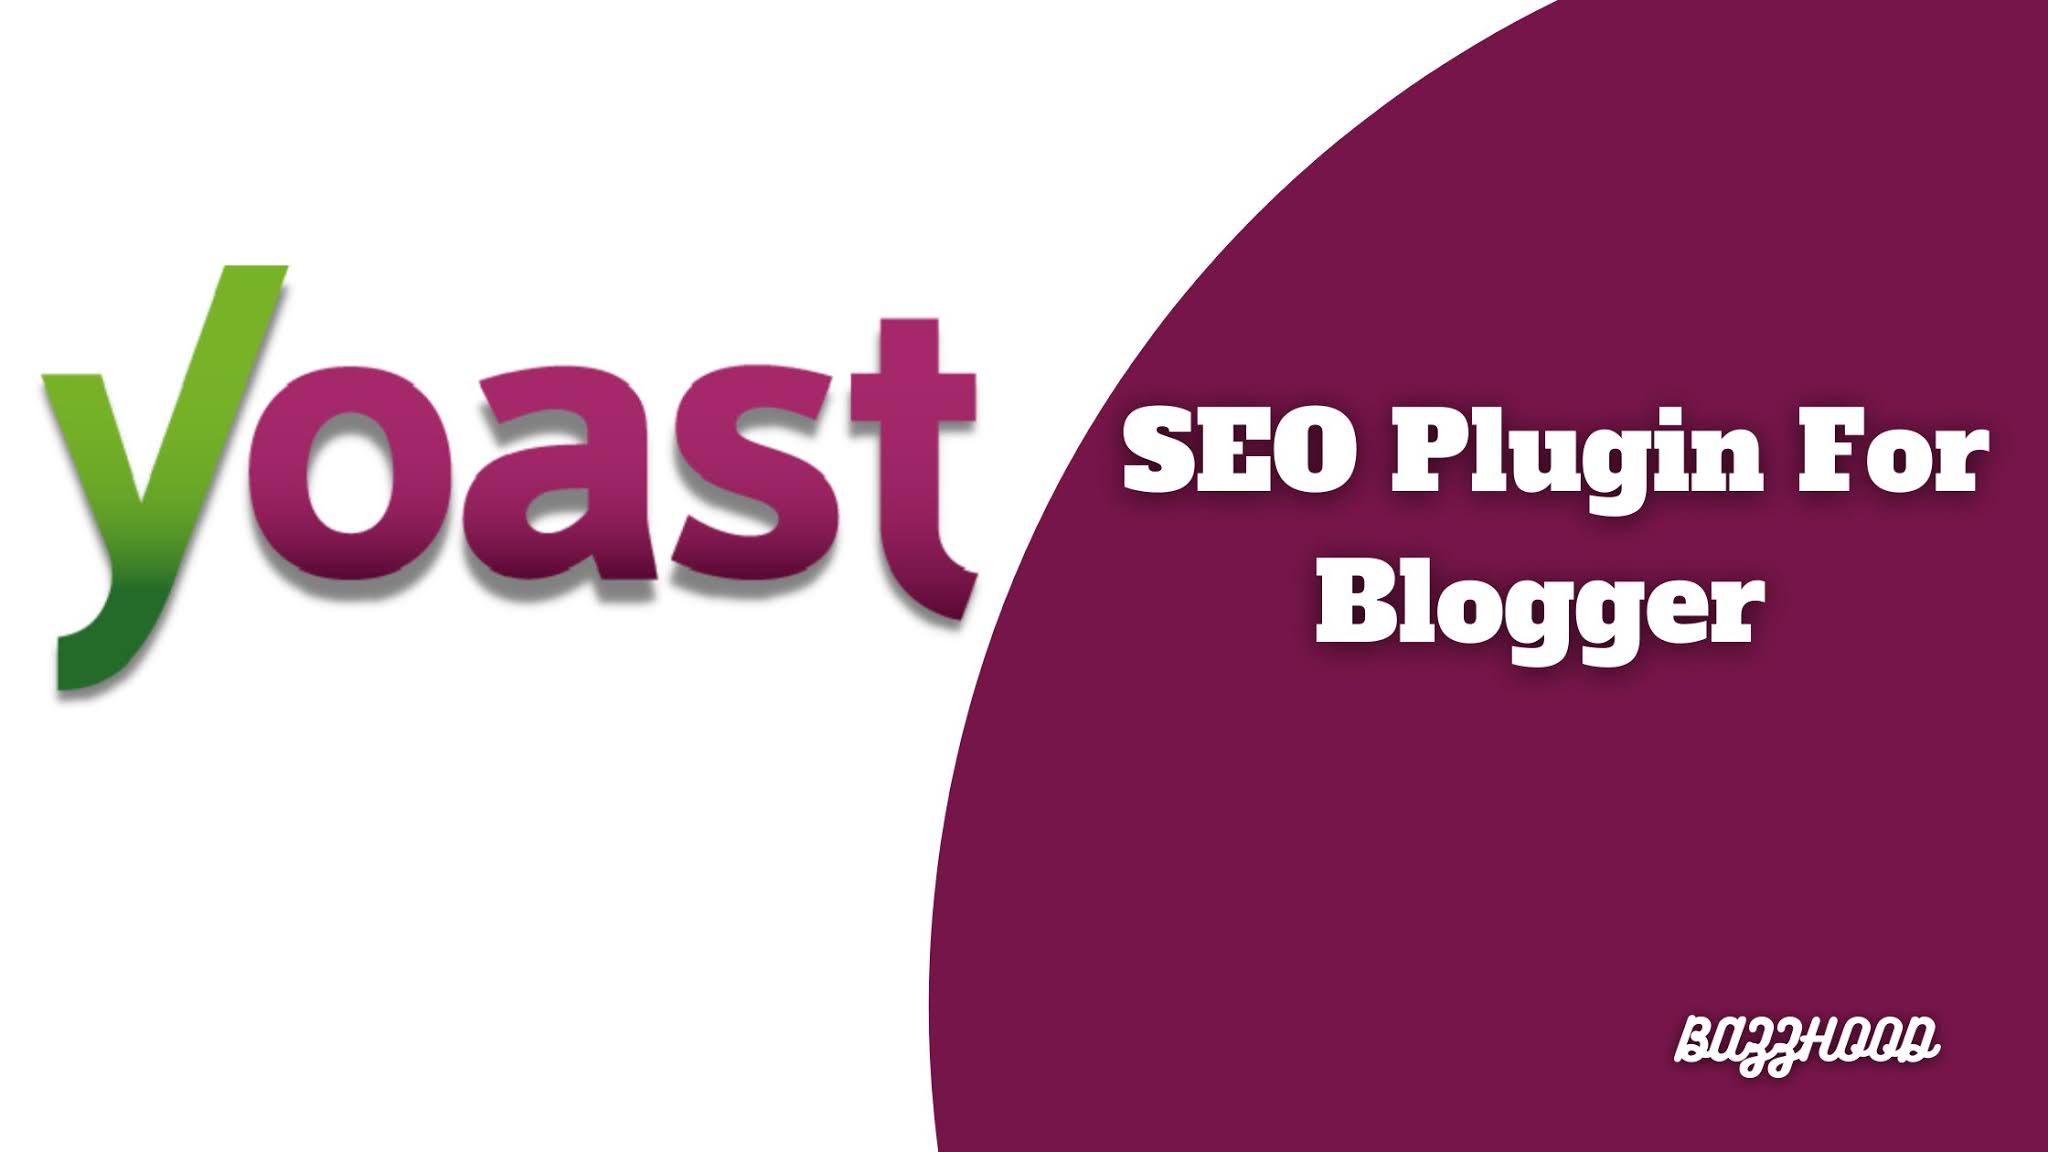 yoast seo plugin for blogger